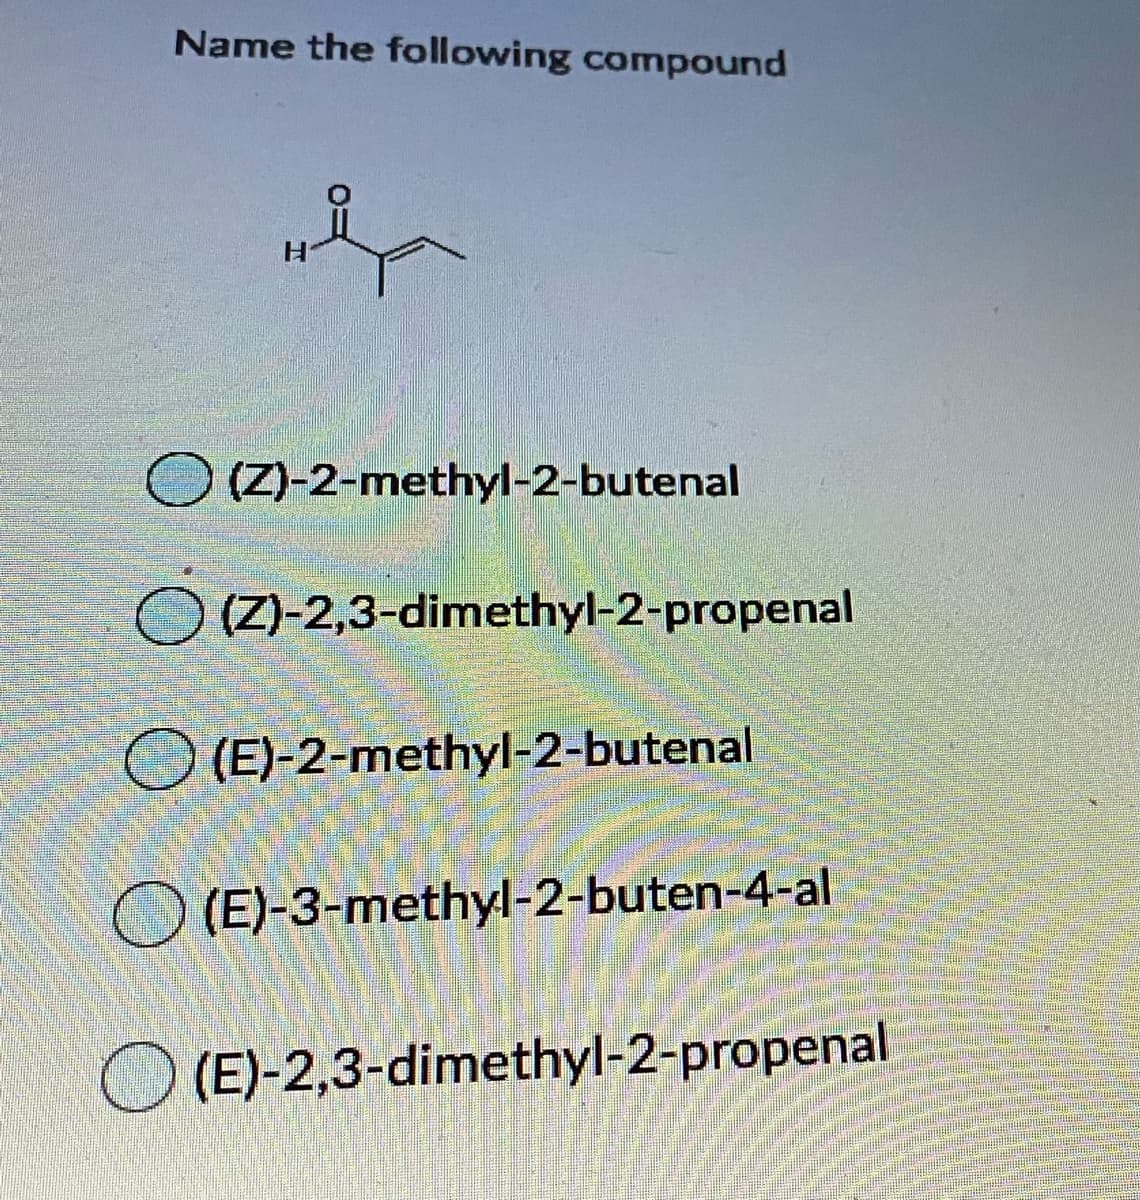 Name the following compound
(Z)-2-methyl-2-butenal
(Z)-2,3-dimethyl-2-propenal
O (E)-2-methyl-2-butenal
O (E)-3-methyl-2-buten-4-al
O (E)-2,3-dimethyl-2-propenal
